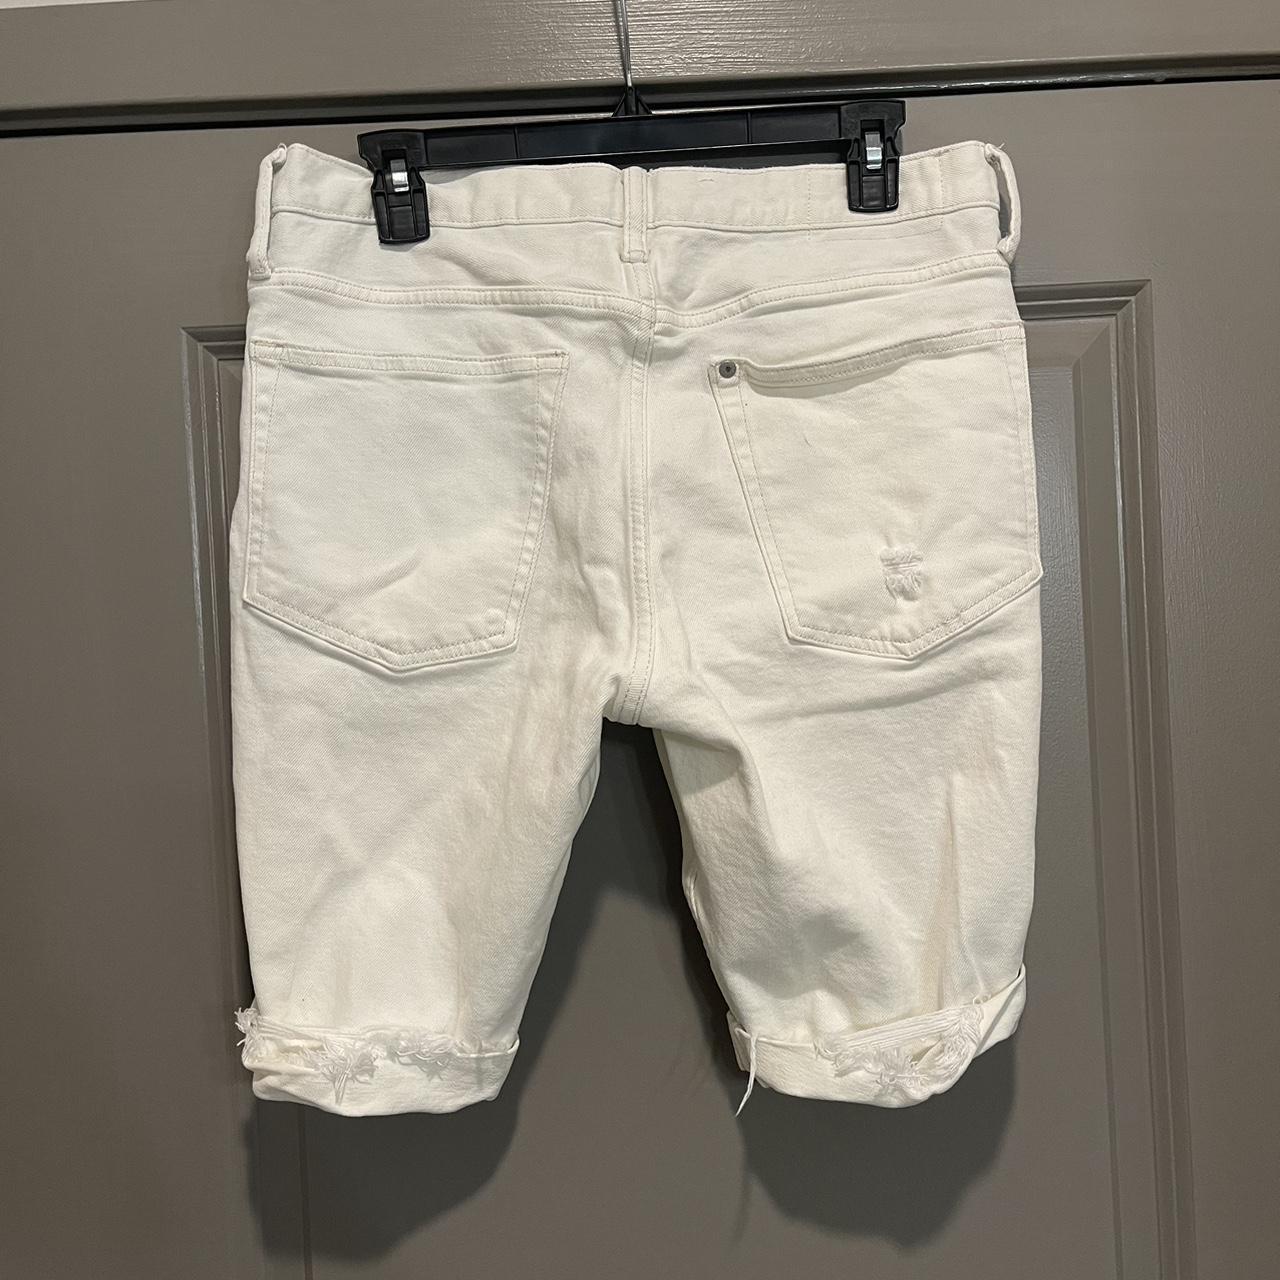 Men’s Distressed White Jean Shorts - Depop